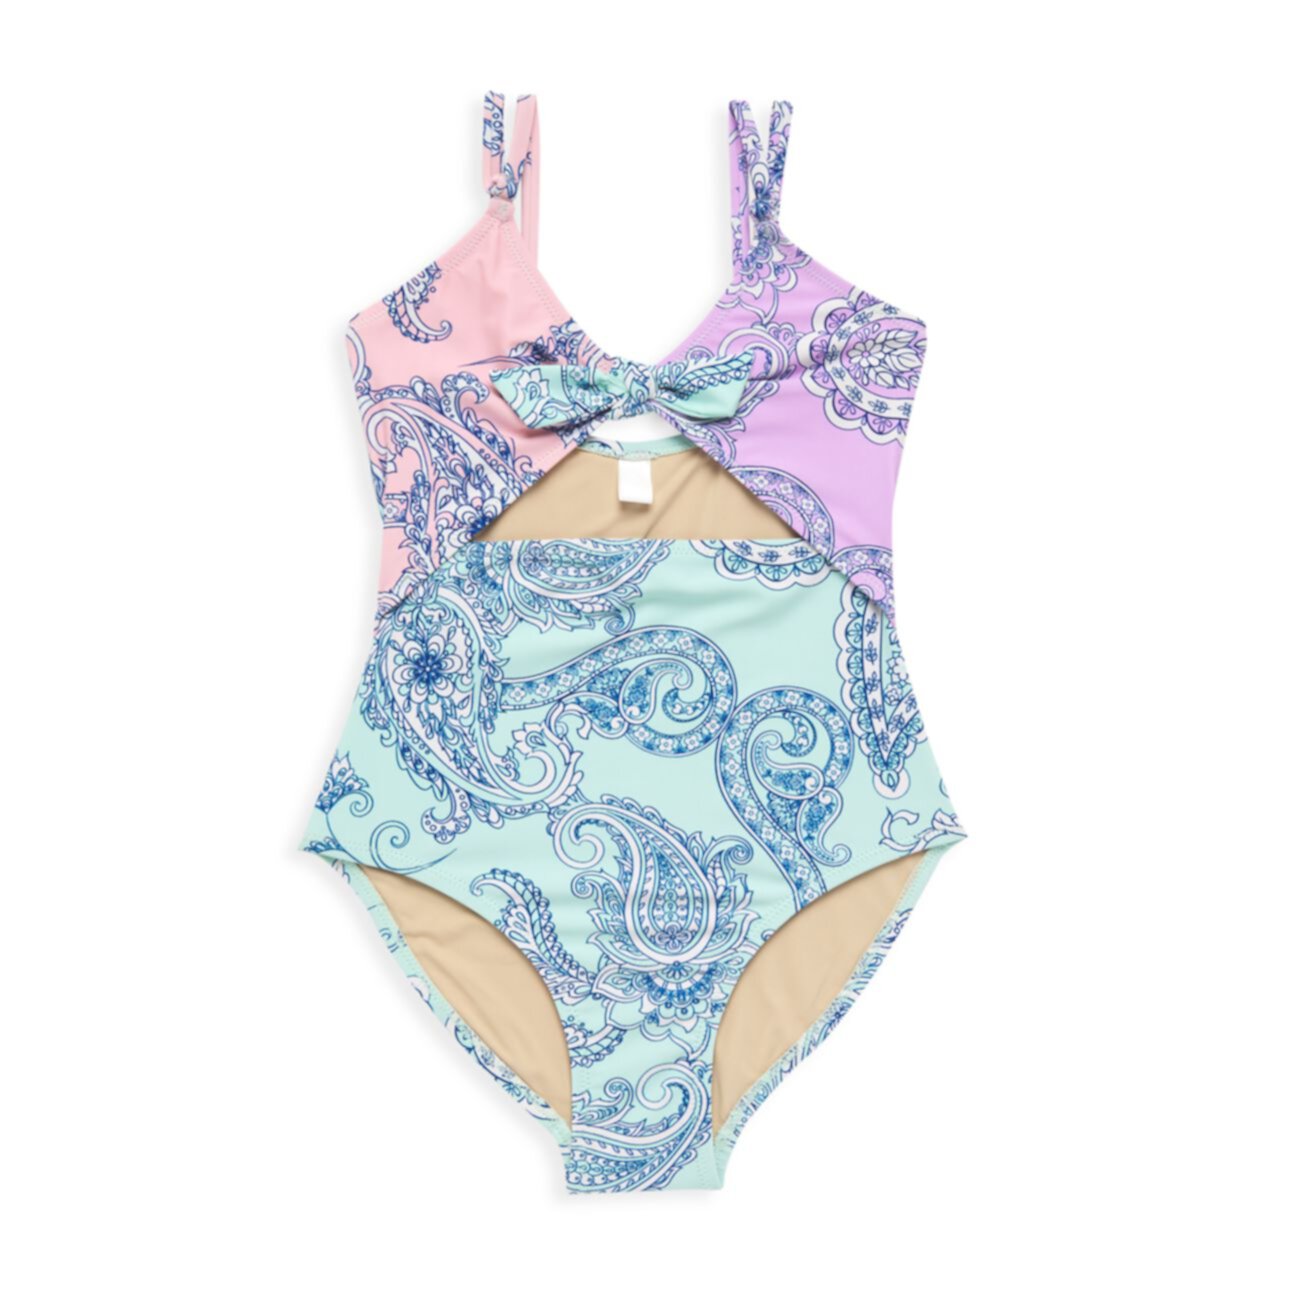 Girl's UPF 50+ Monokini Paisley Colorblock-Print Swimsuit Shade critters